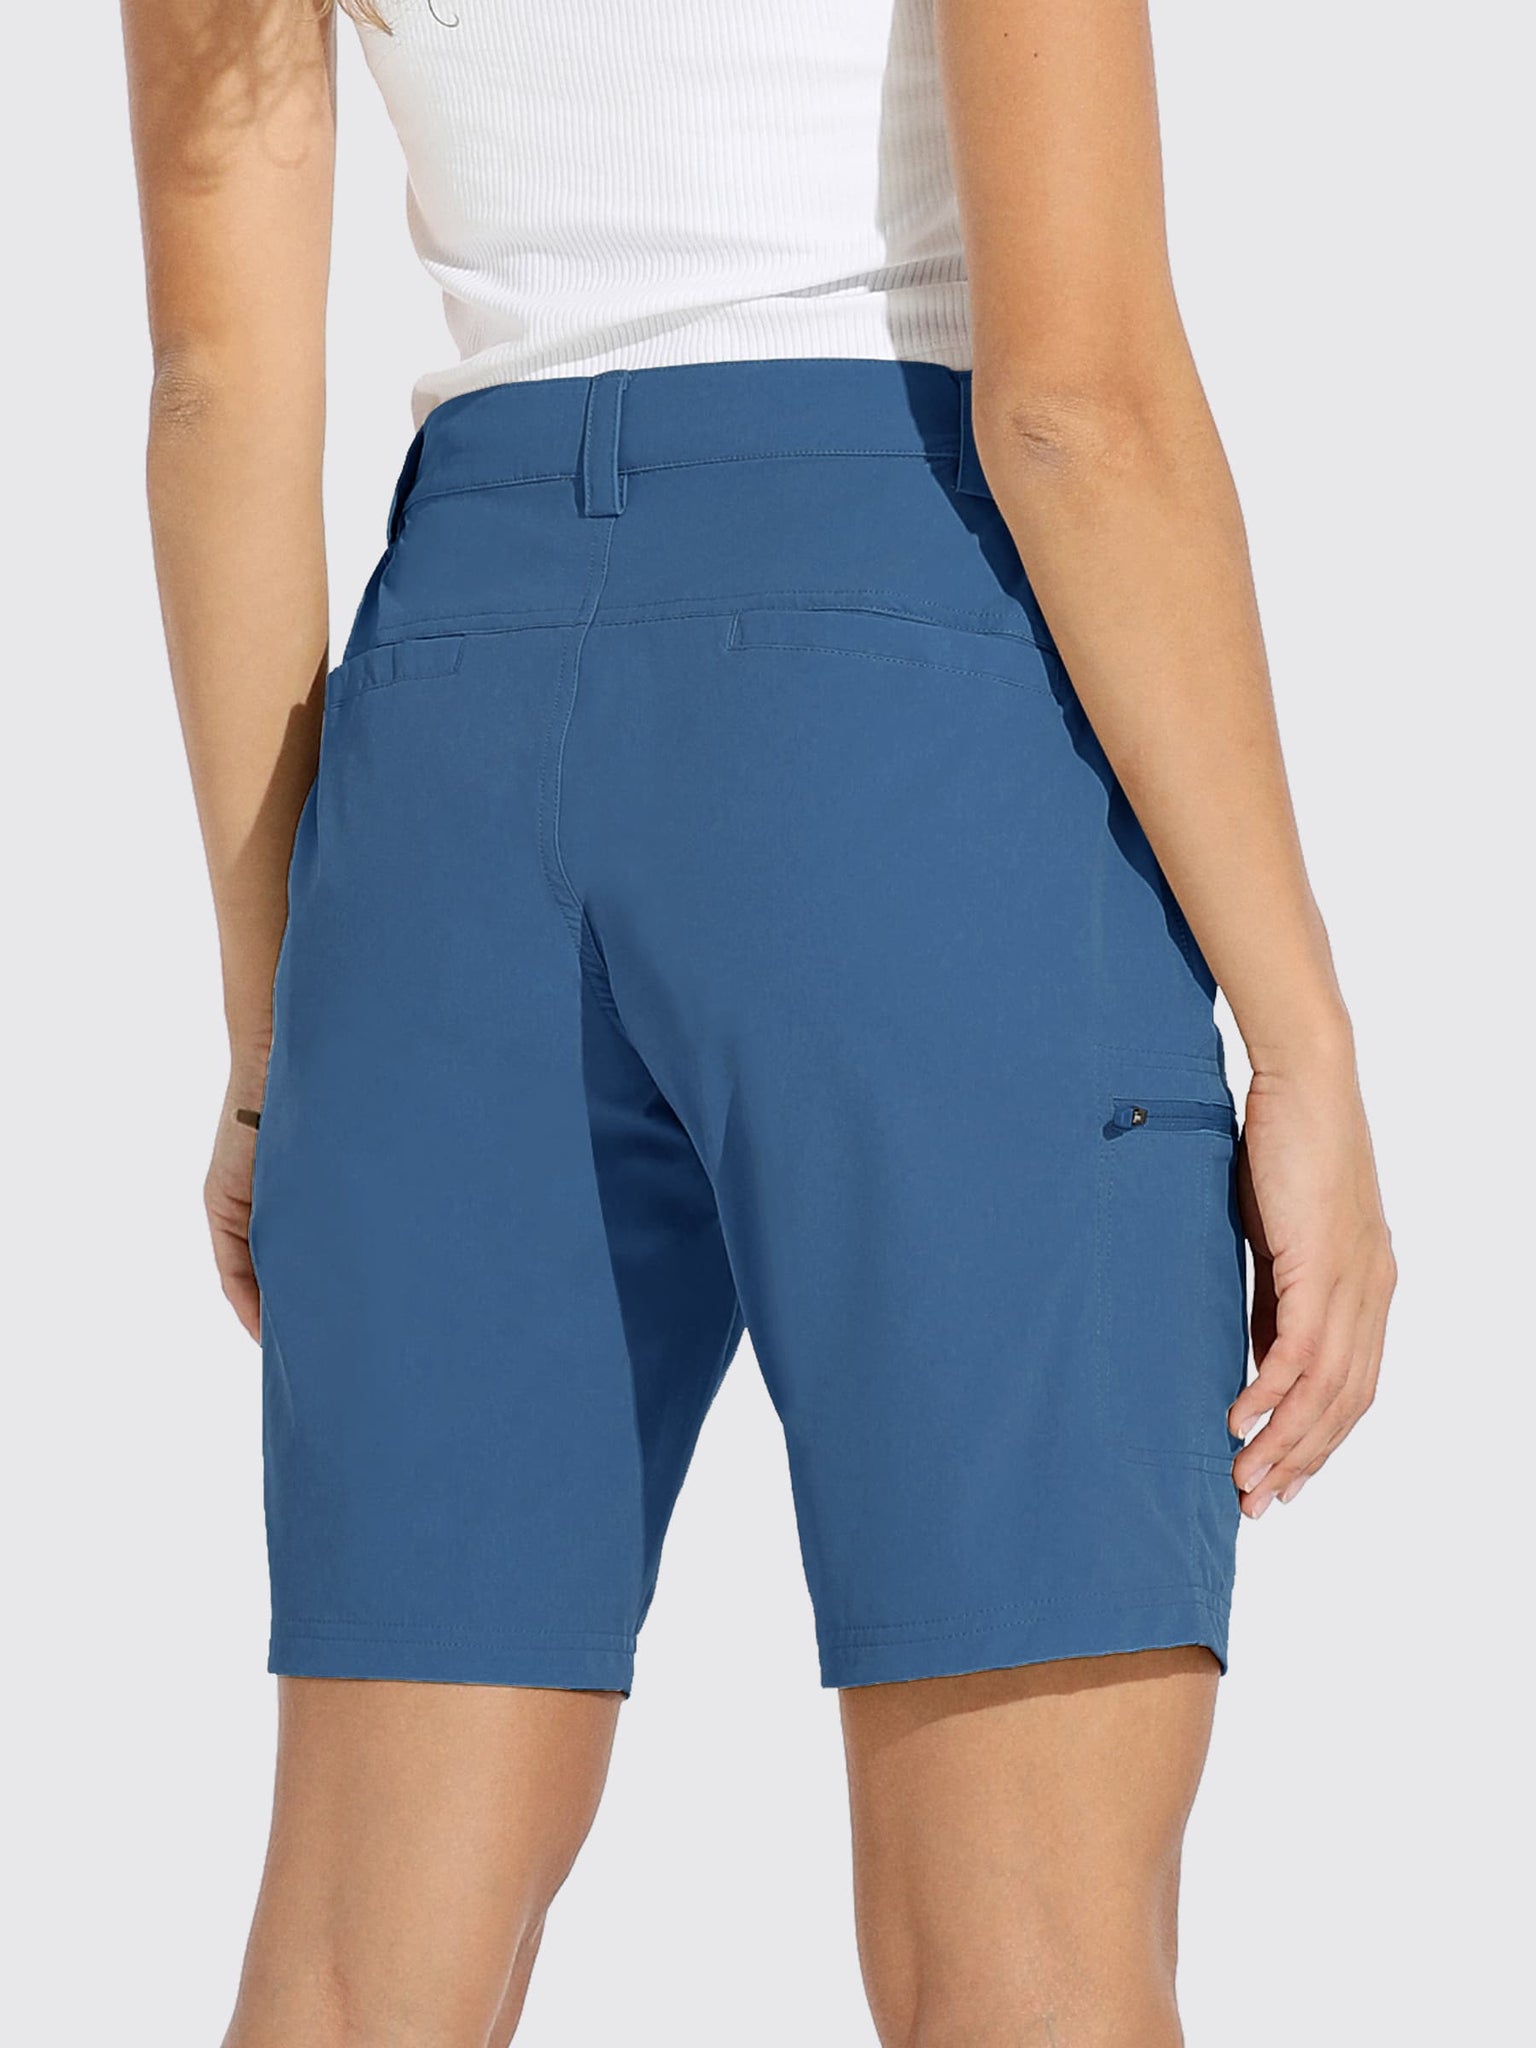 Women's Outdoor Cargo Shorts 10 Inseam_Blue2